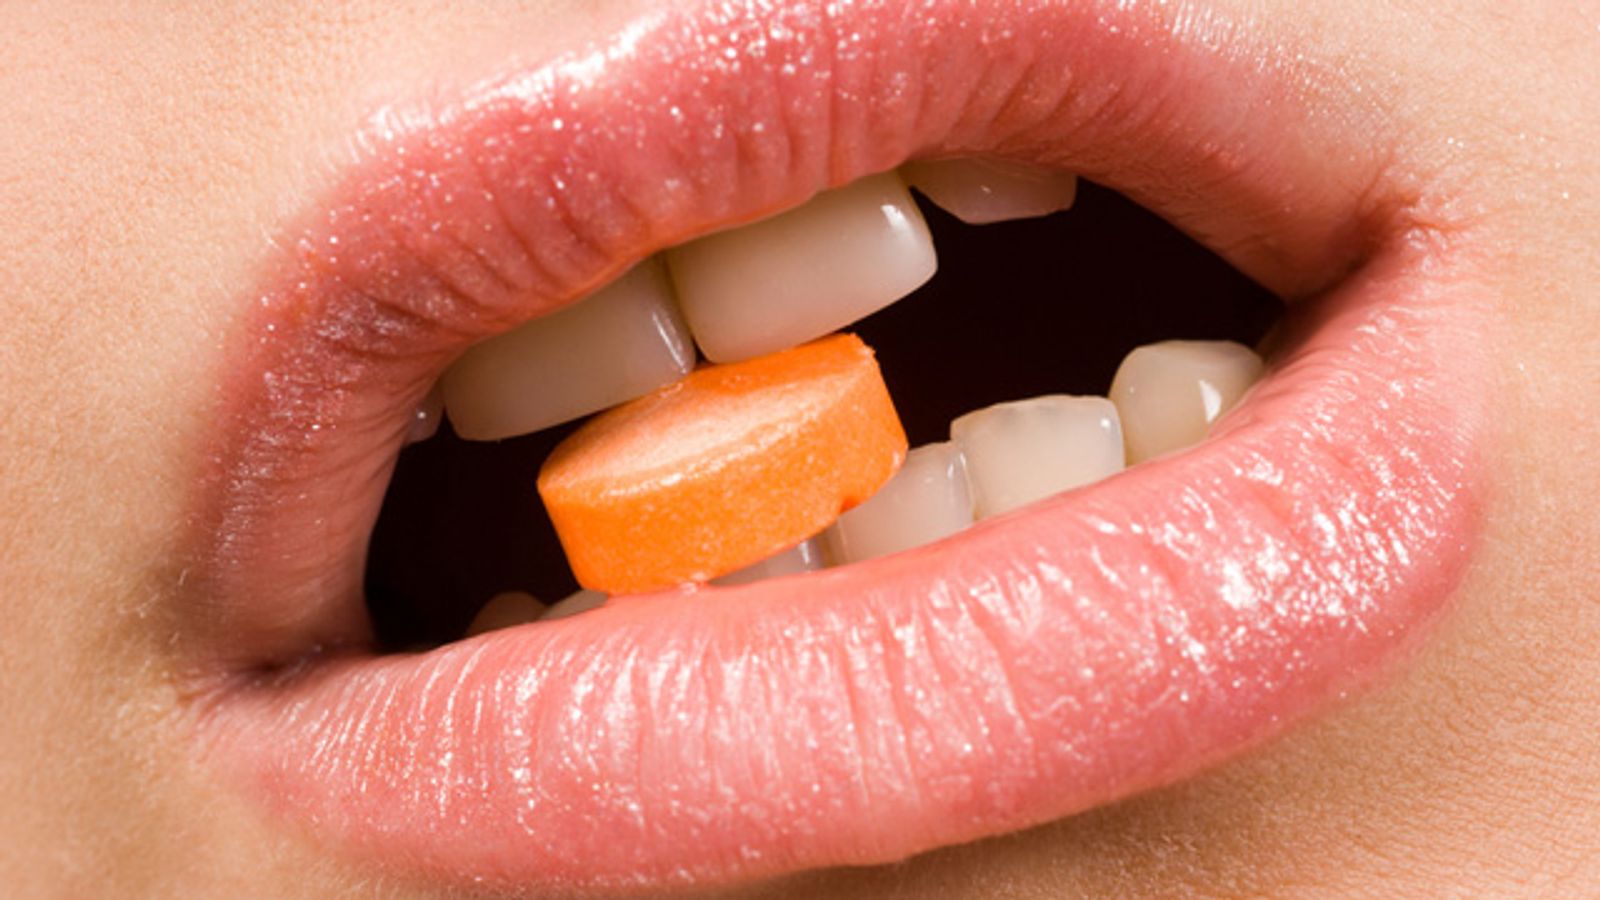 Test Results Are Promising for ‘Female Viagra’ Drug